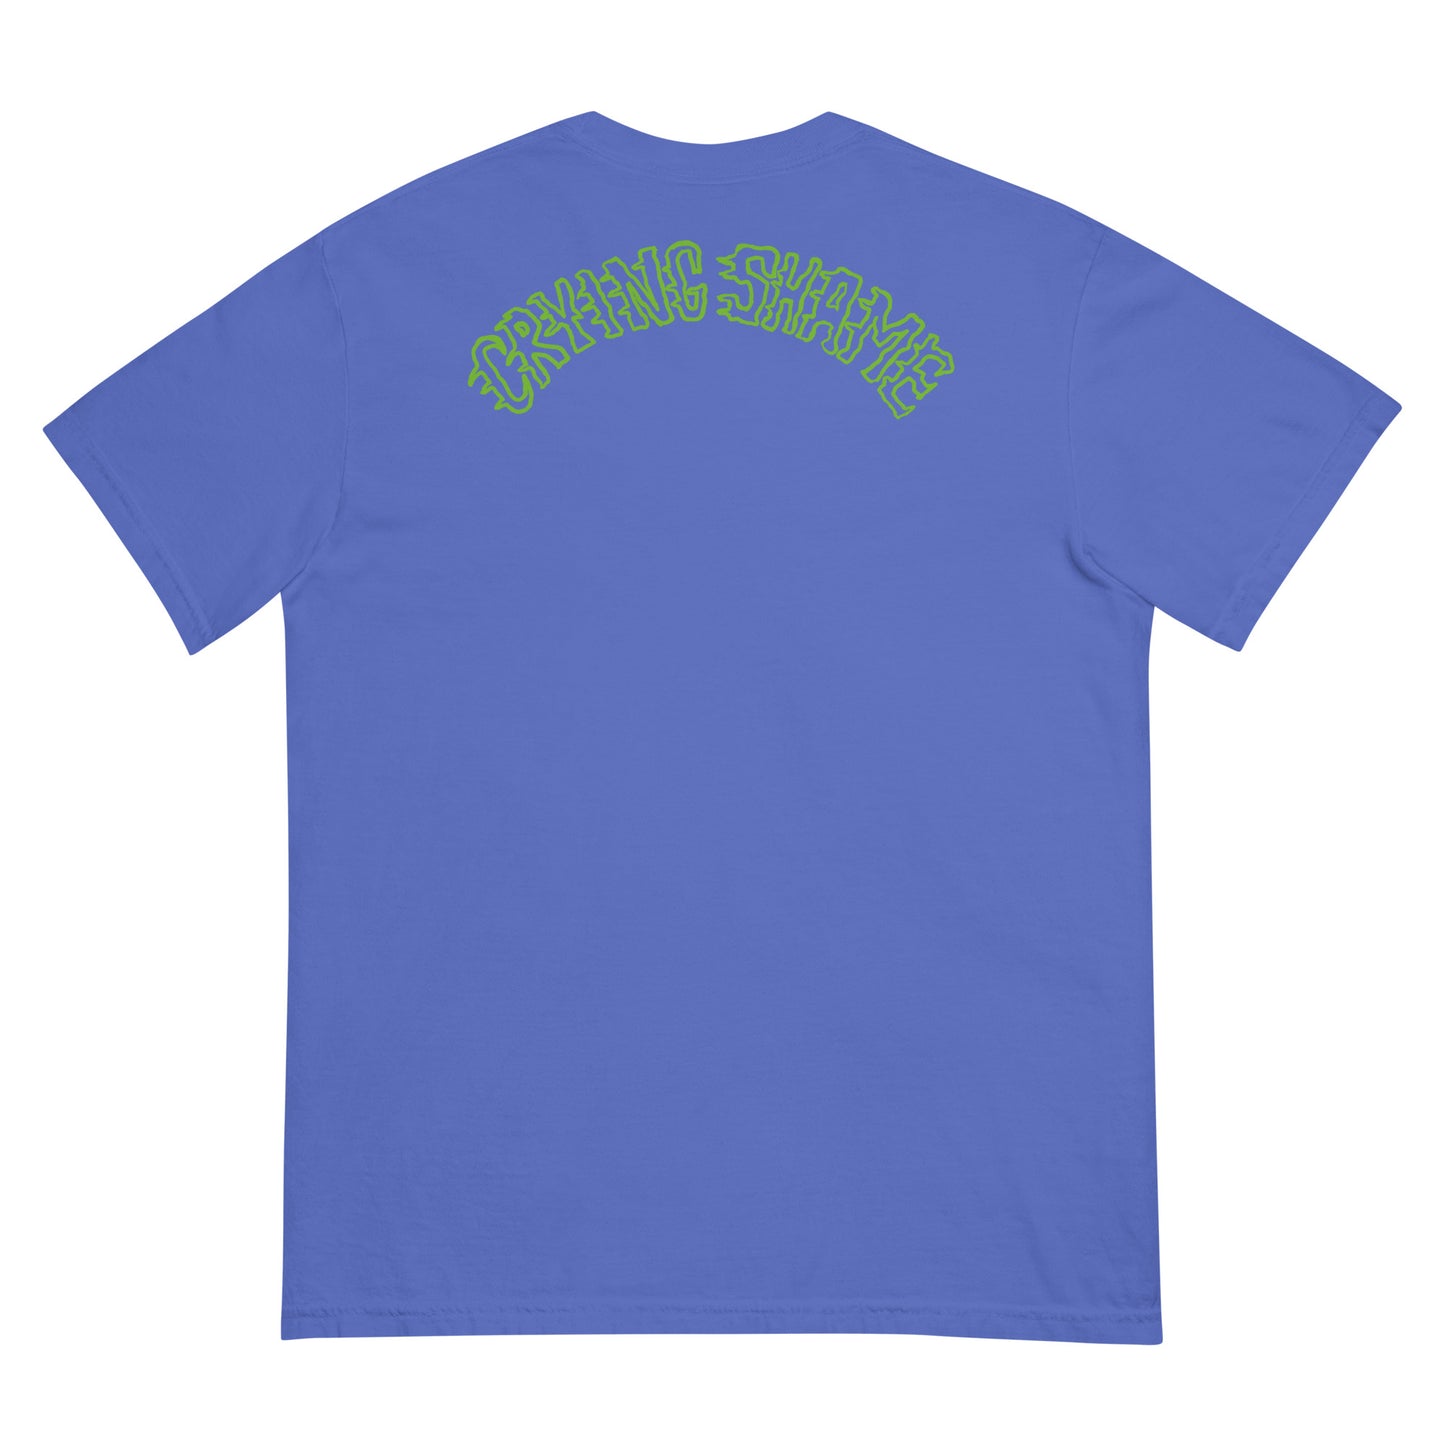 Crying Shame - Bling Skater - Unisex garment-dyed heavyweight t-shirt